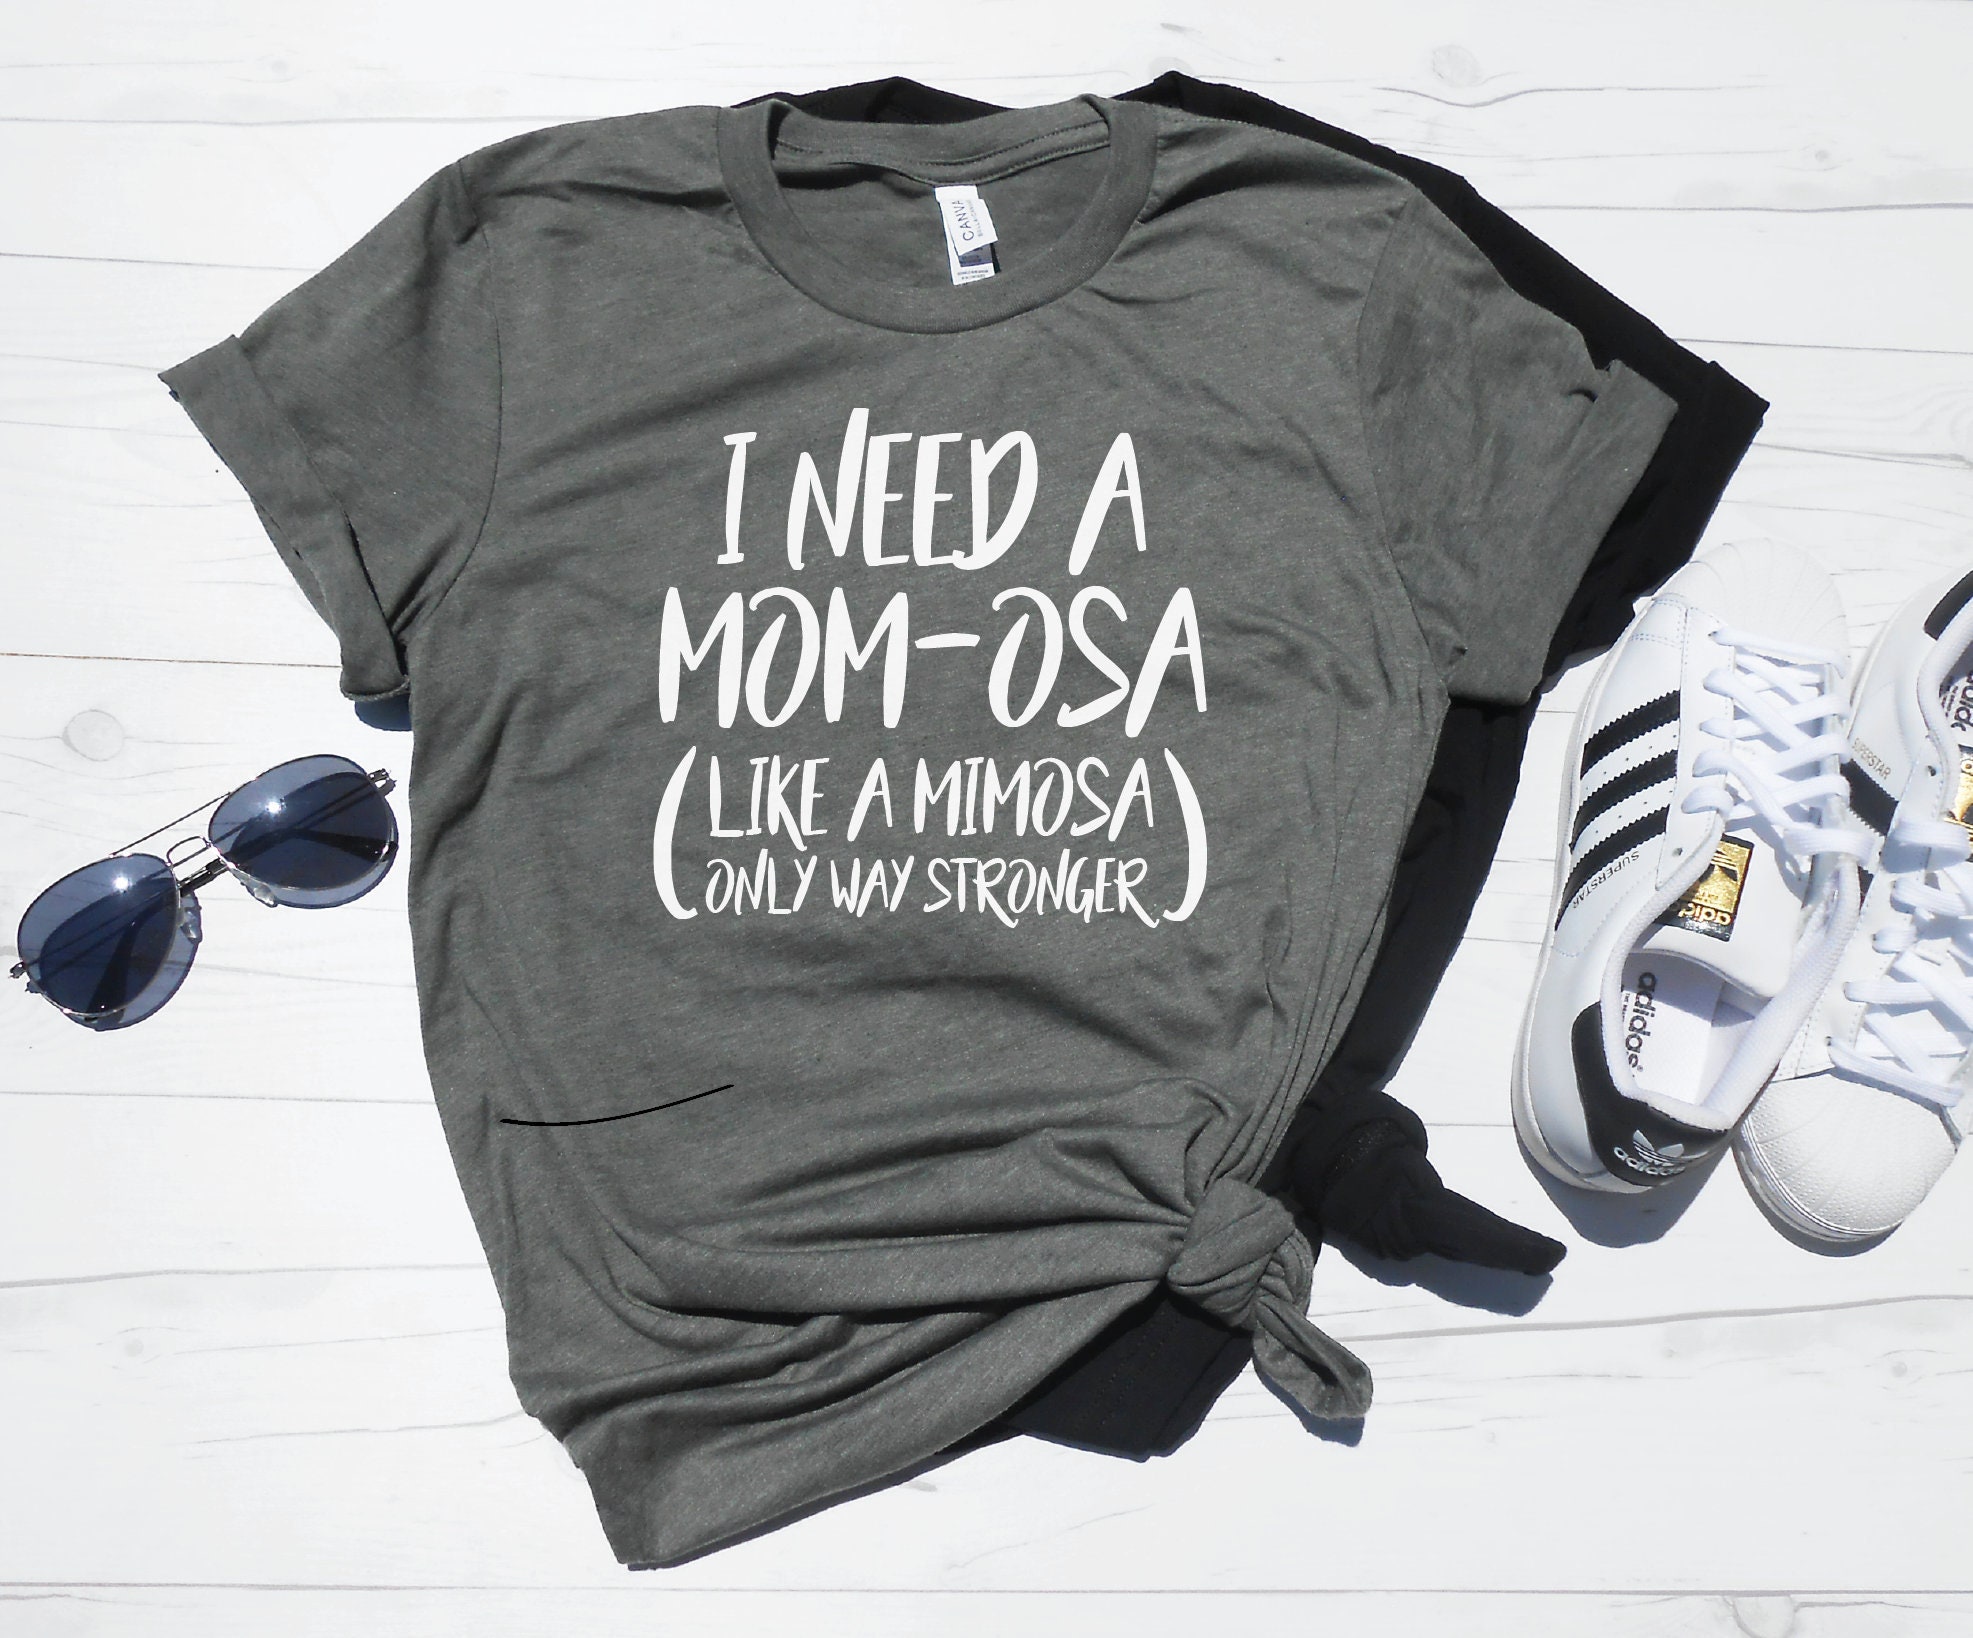 I Need a Mom-osa like a Mimosa Only Way Stronger Shirt, Funny